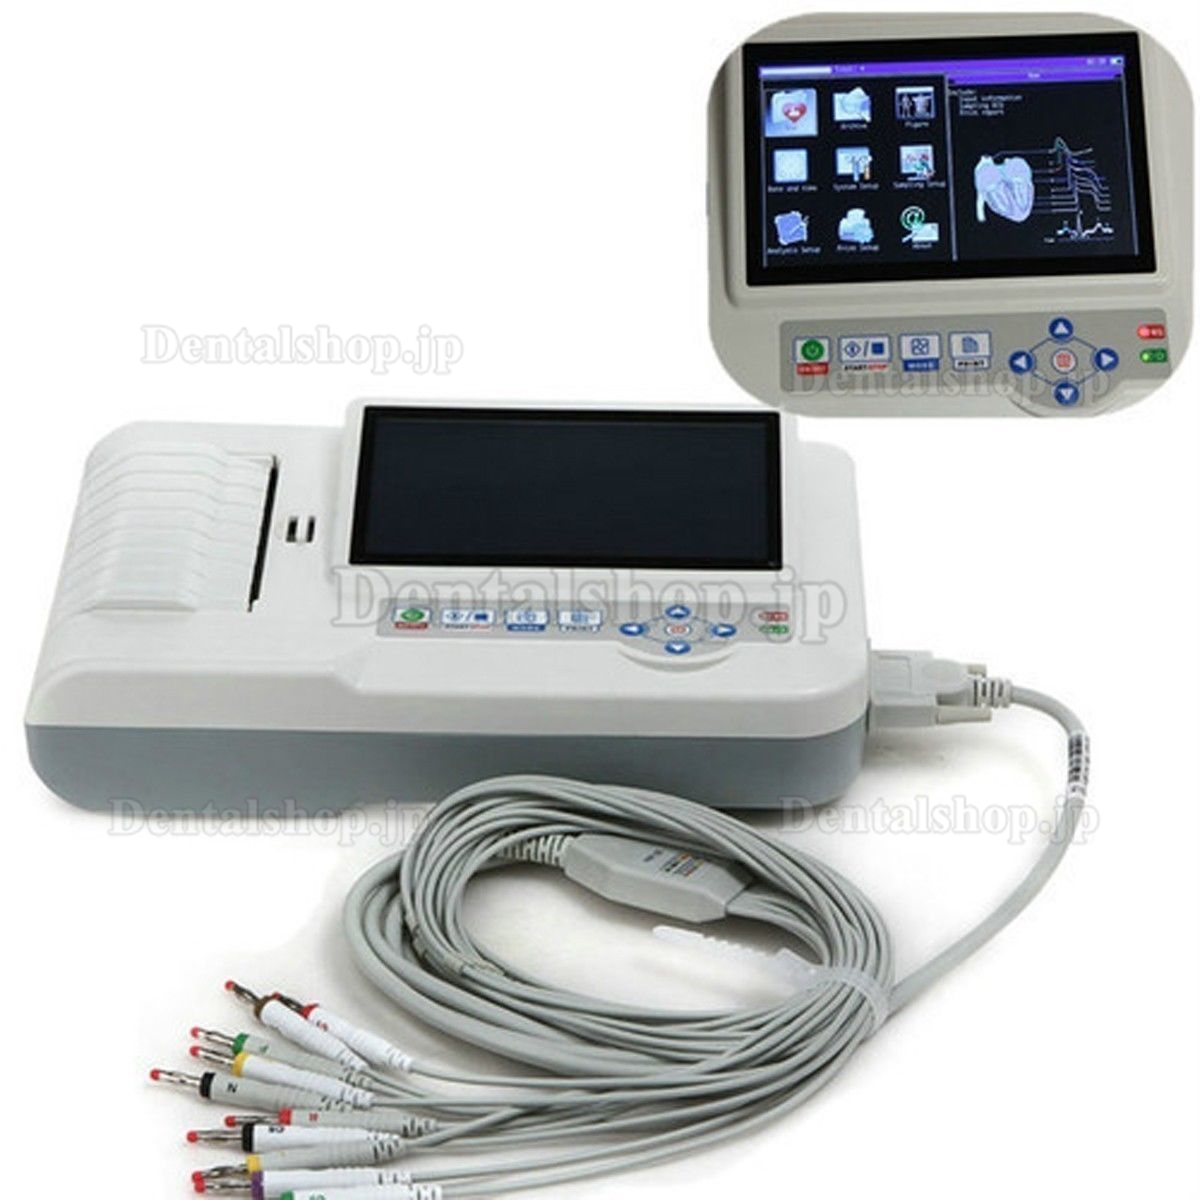 COMTEC® ECGー600G家庭用·携帯型心電計